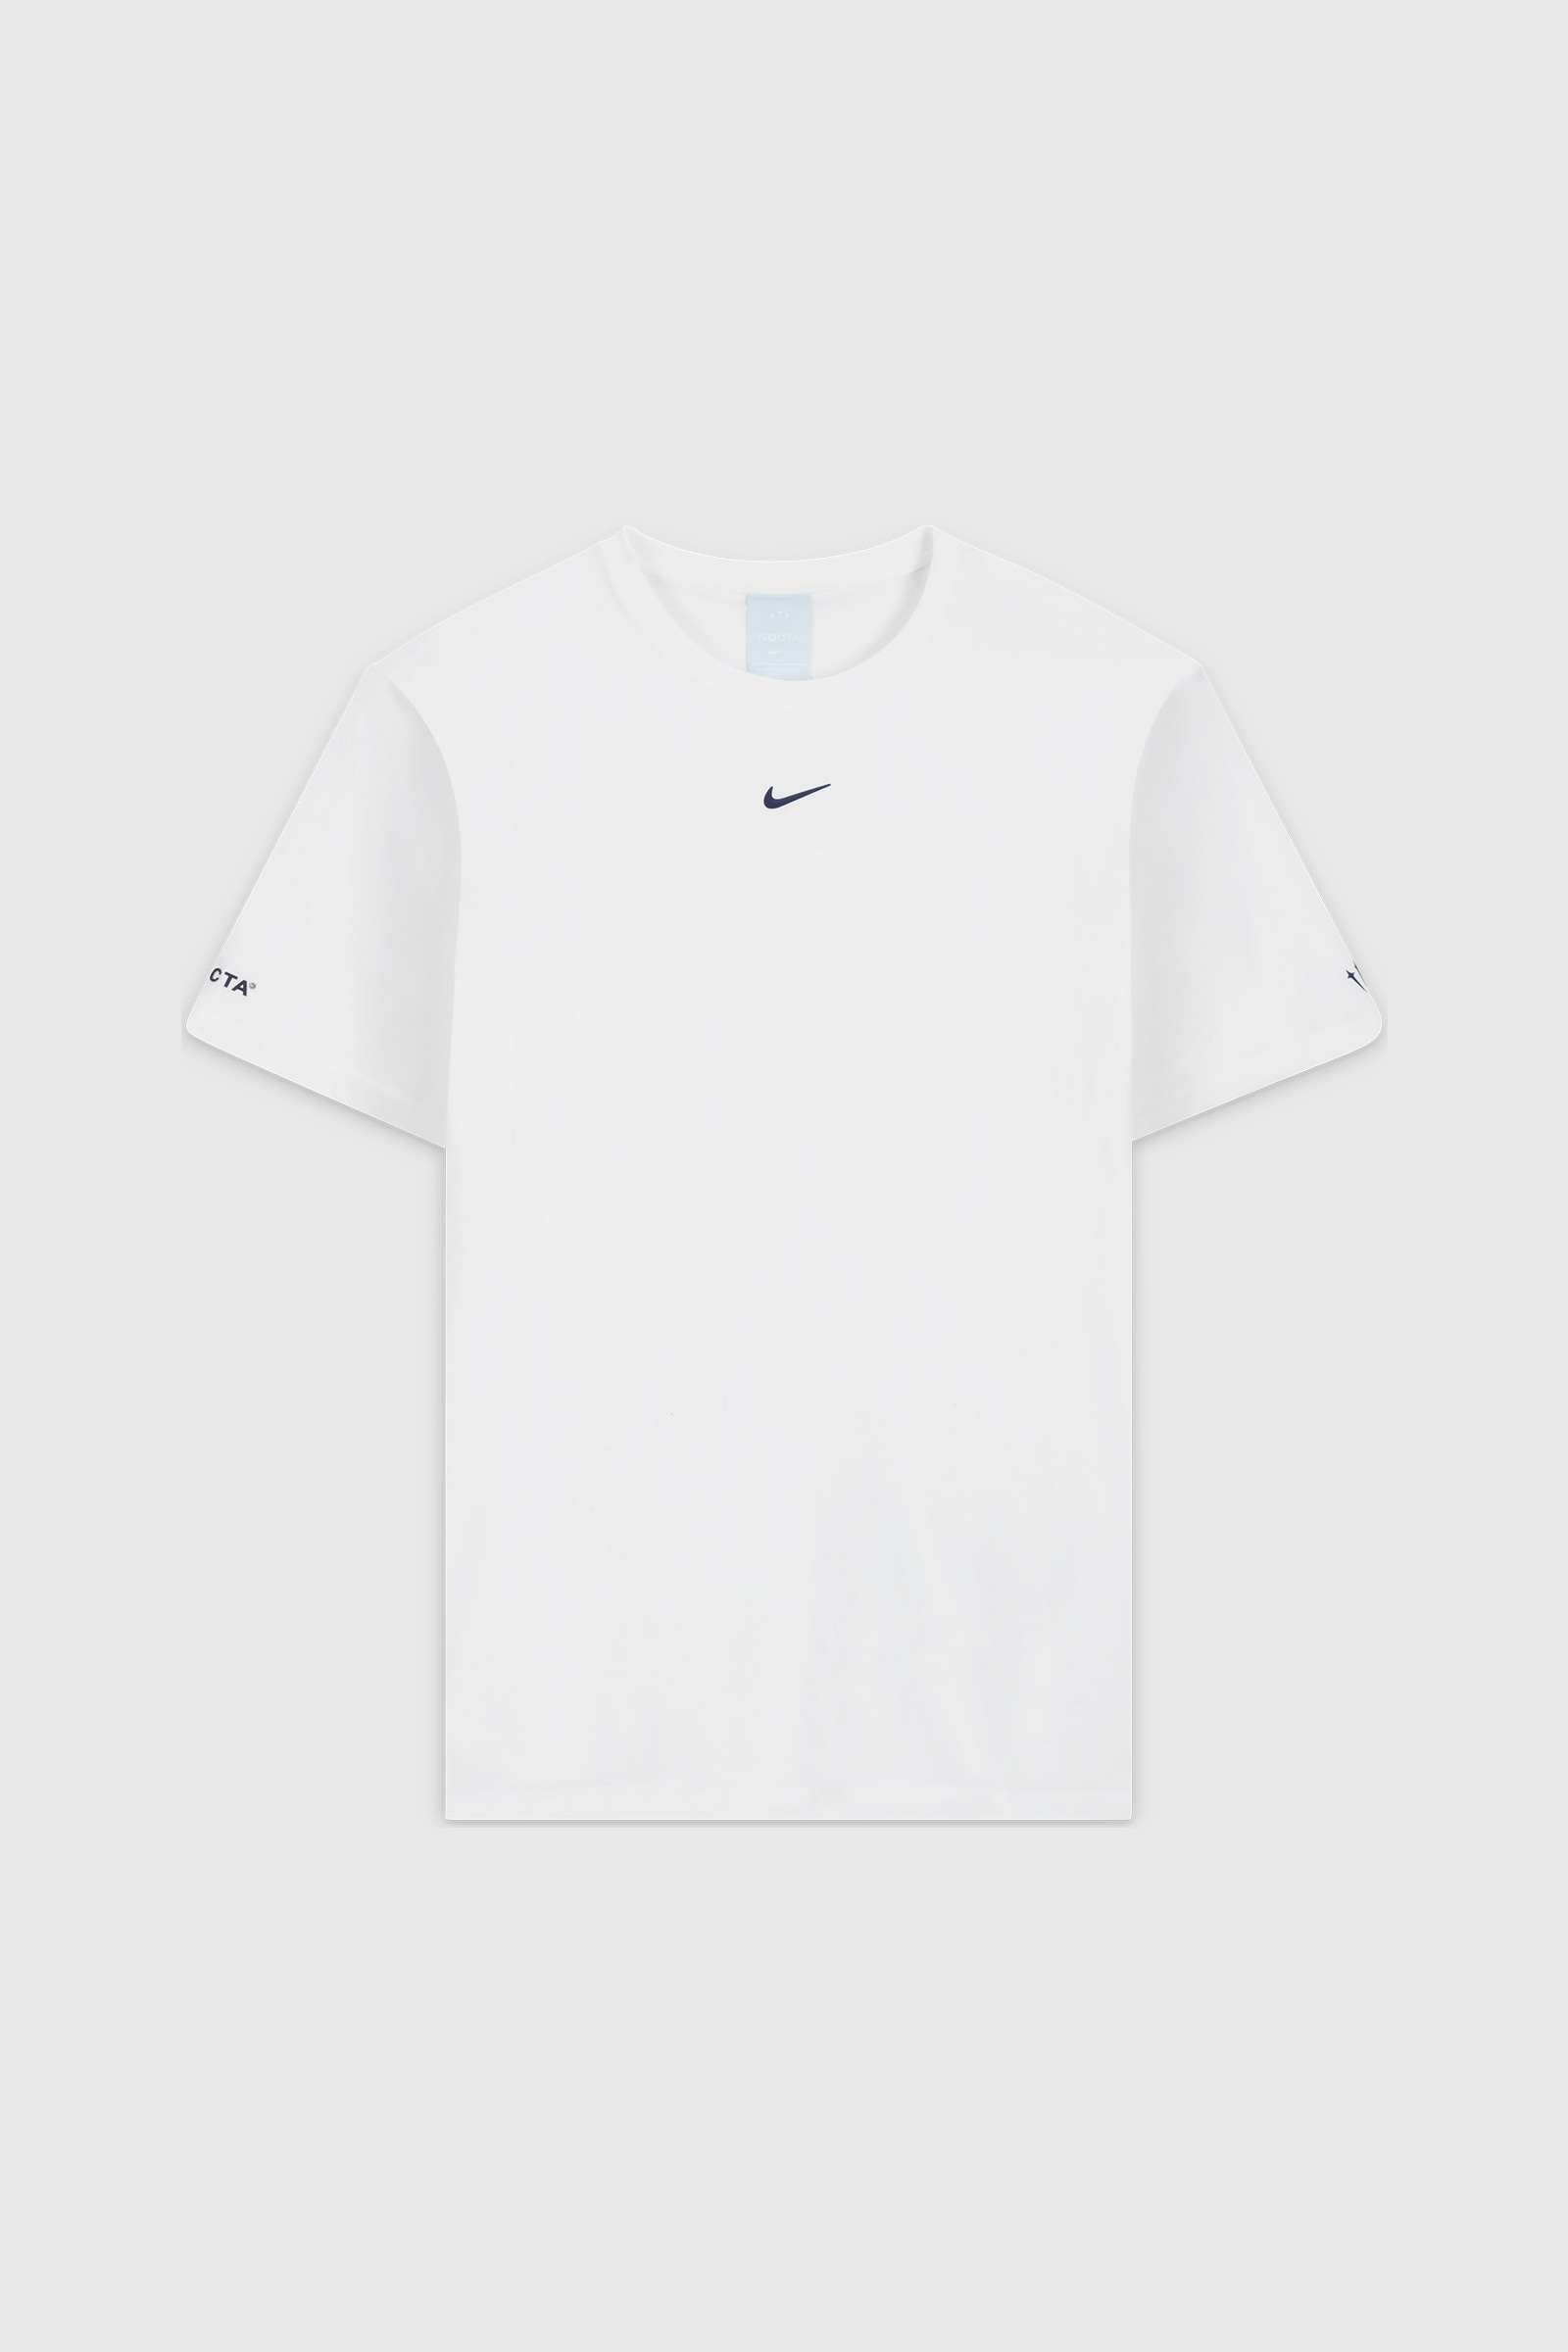 Nike Black NOCTA NRG AU T-Shirt Nike